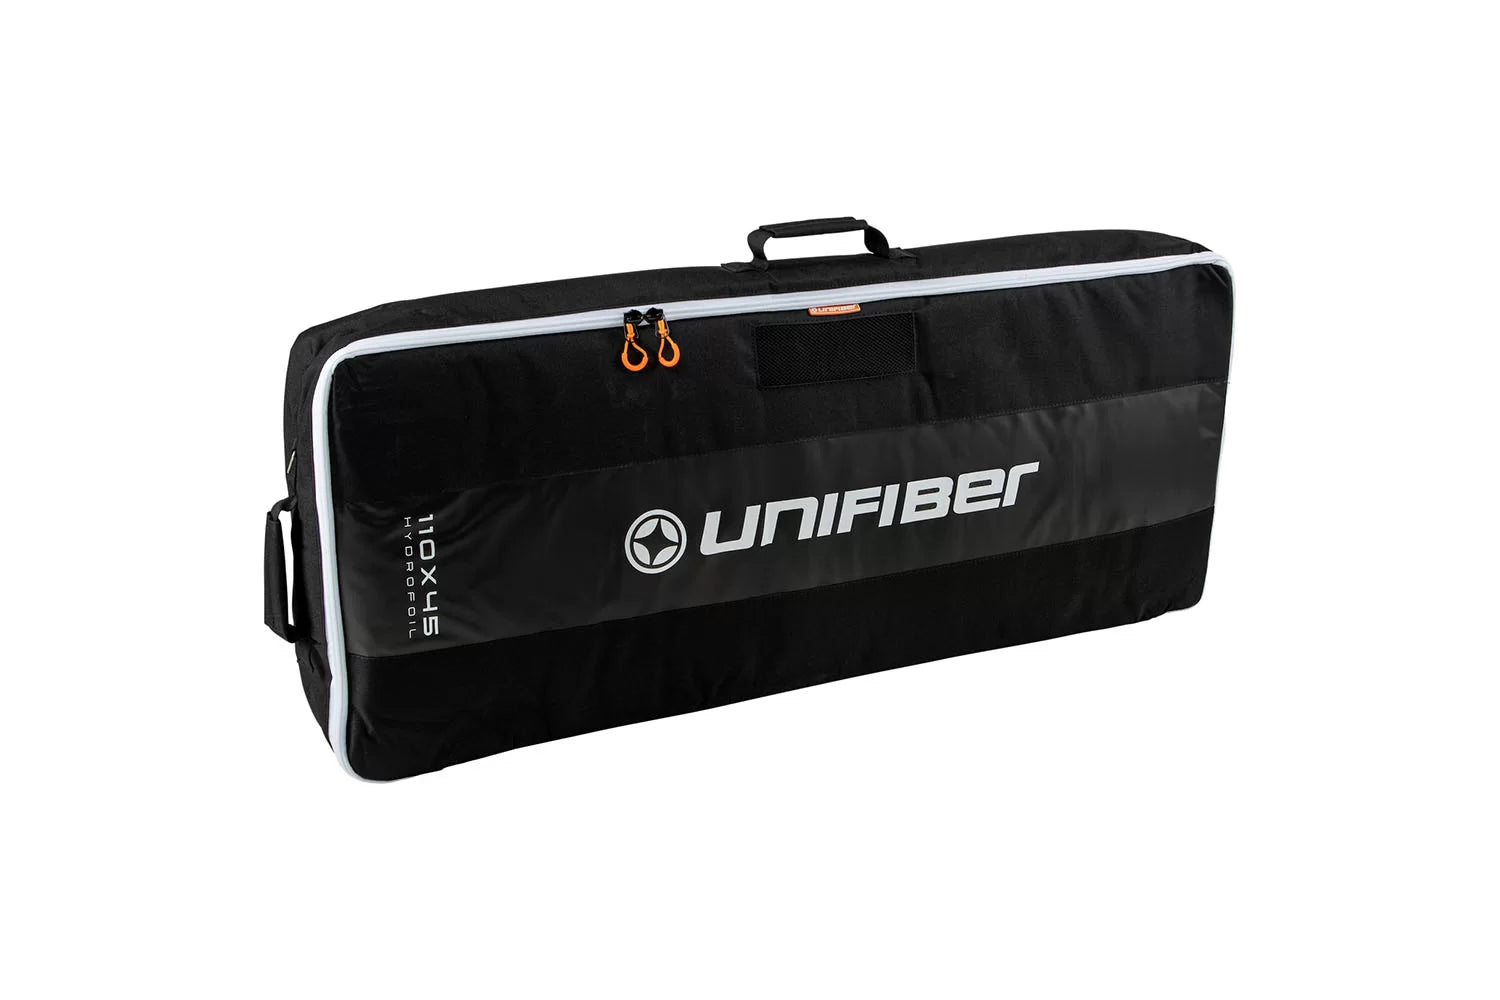 Unifiber Blackline Hydrofoil Bag